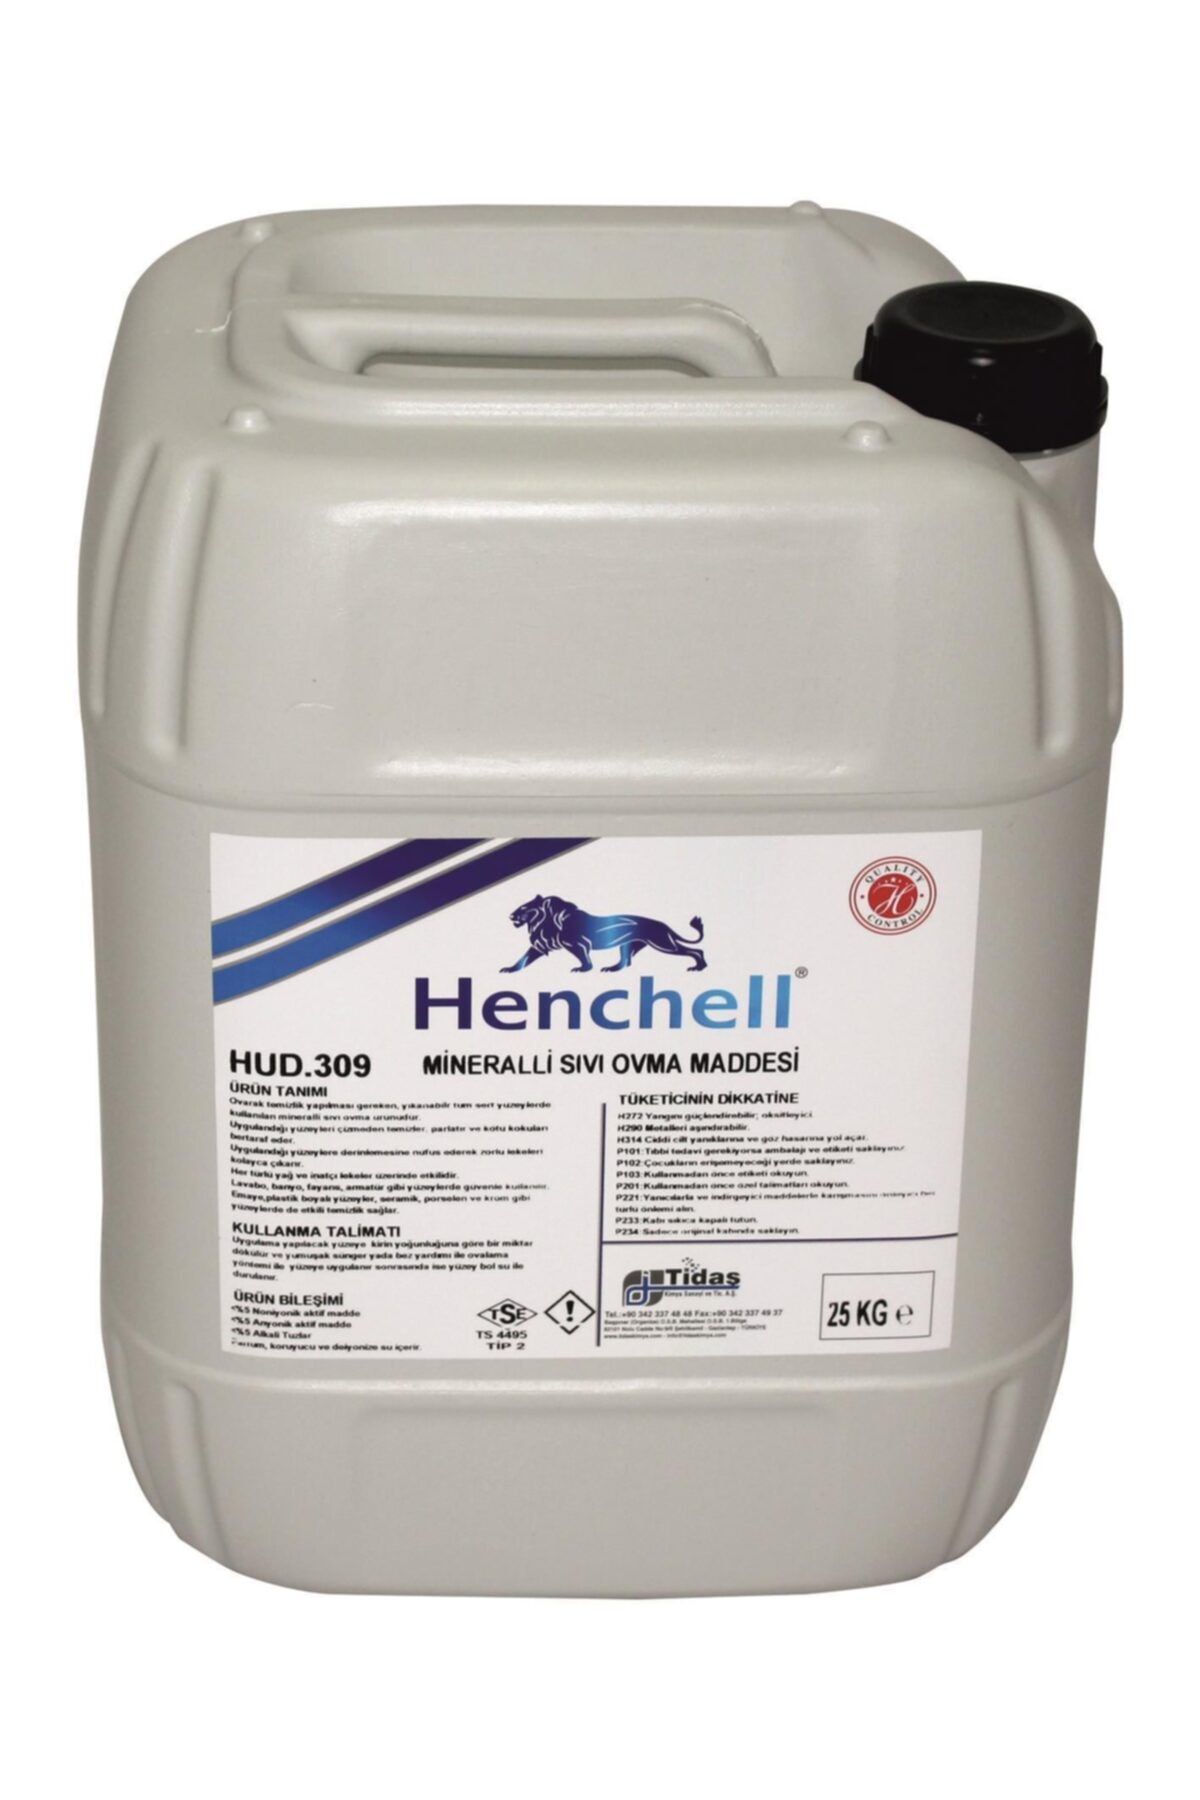 Henchell Mineralli Sıvı Ovma Maddesi 25kg